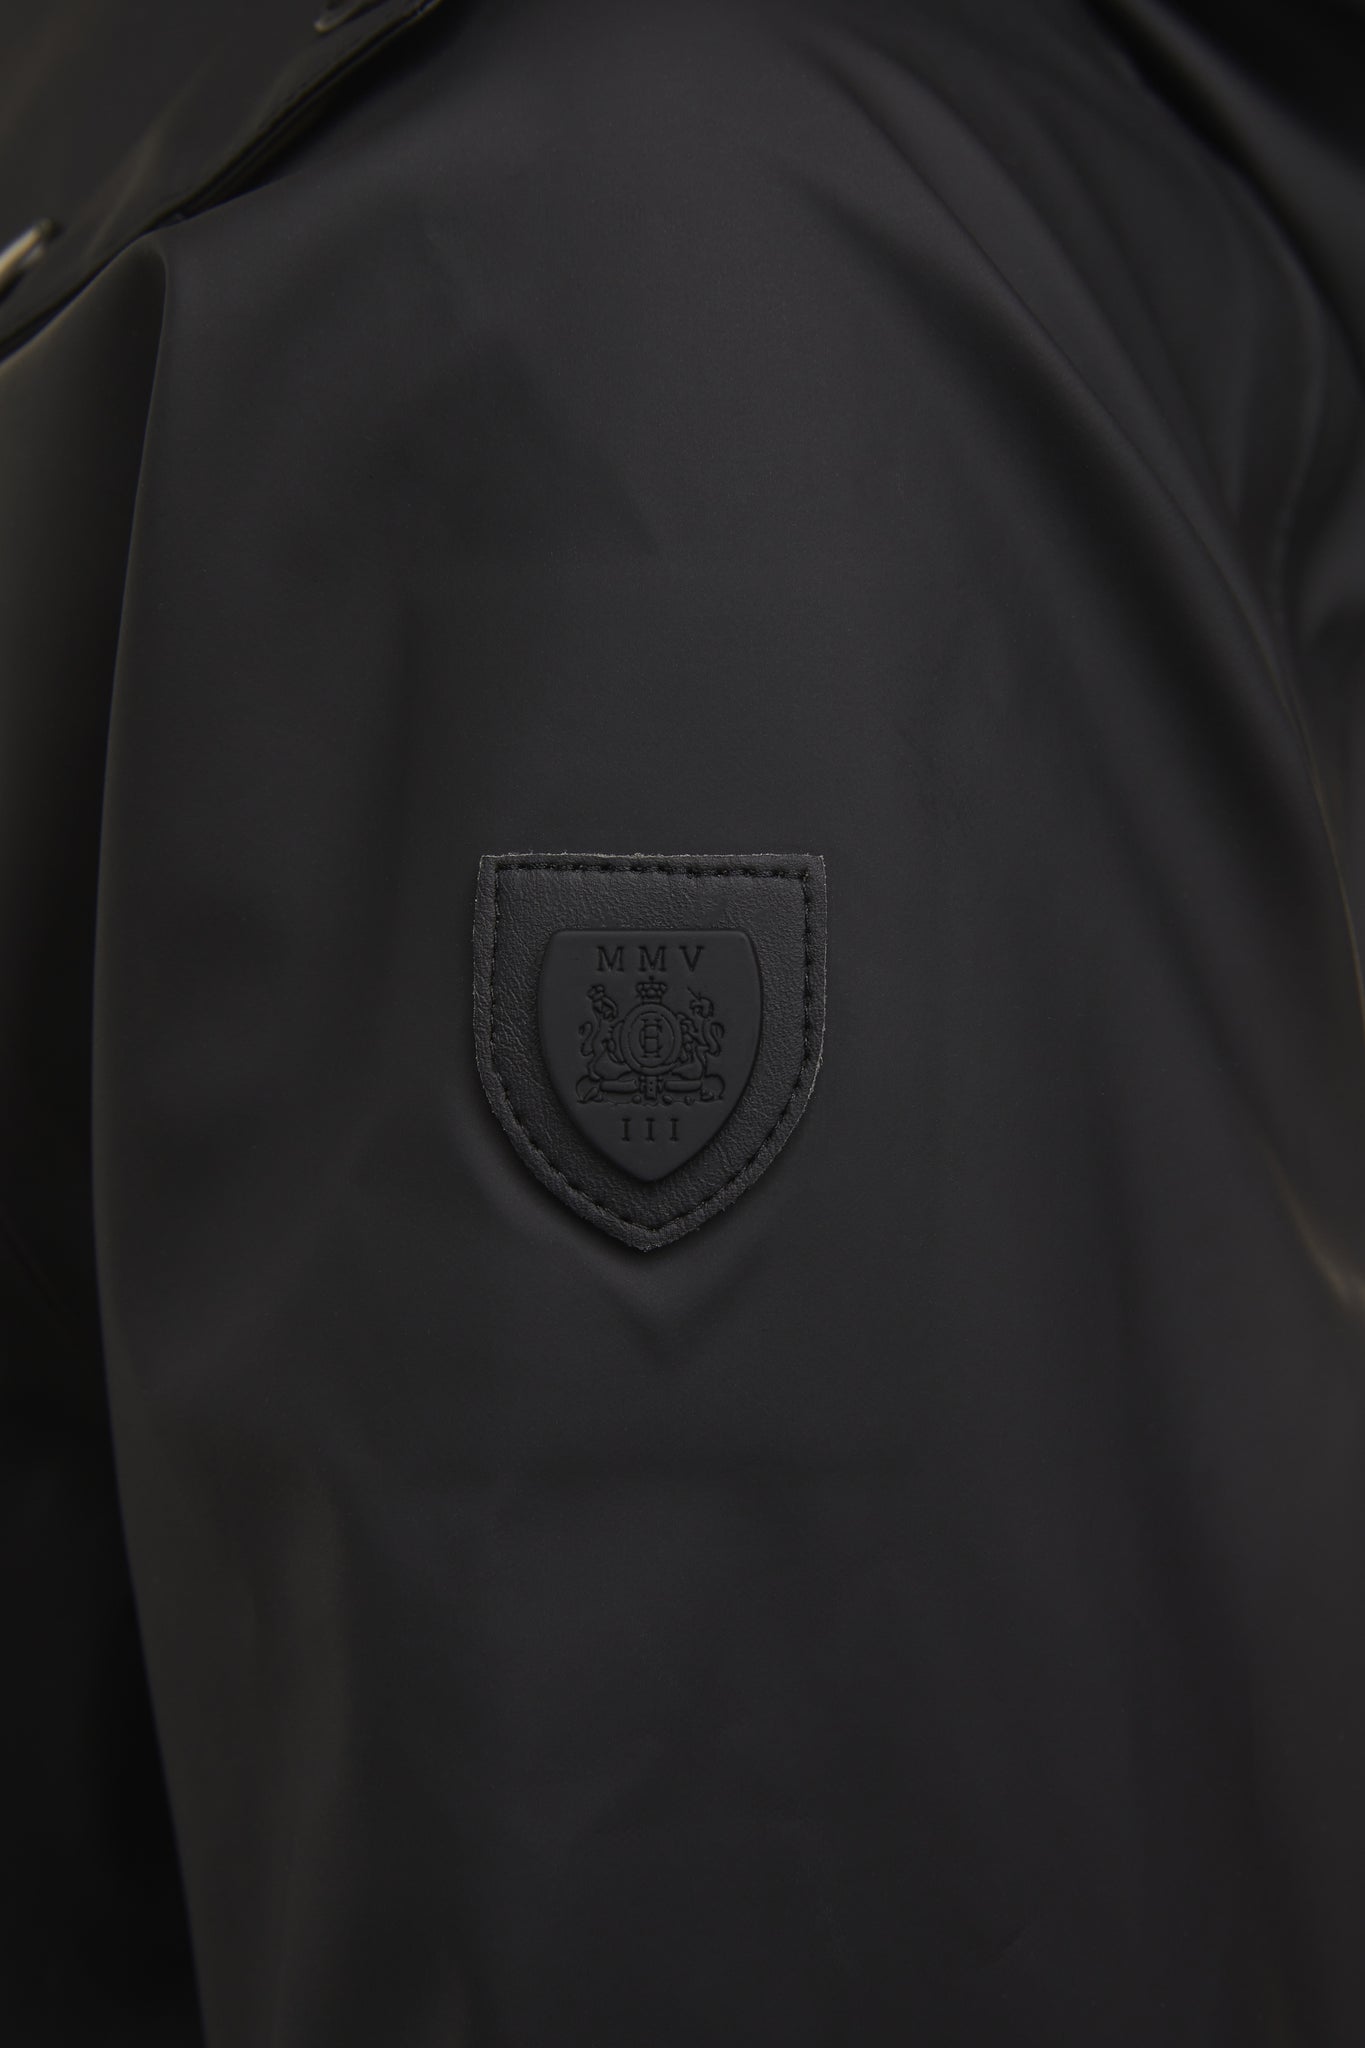 shield detail of womens black hooded rain coat with black hardware 